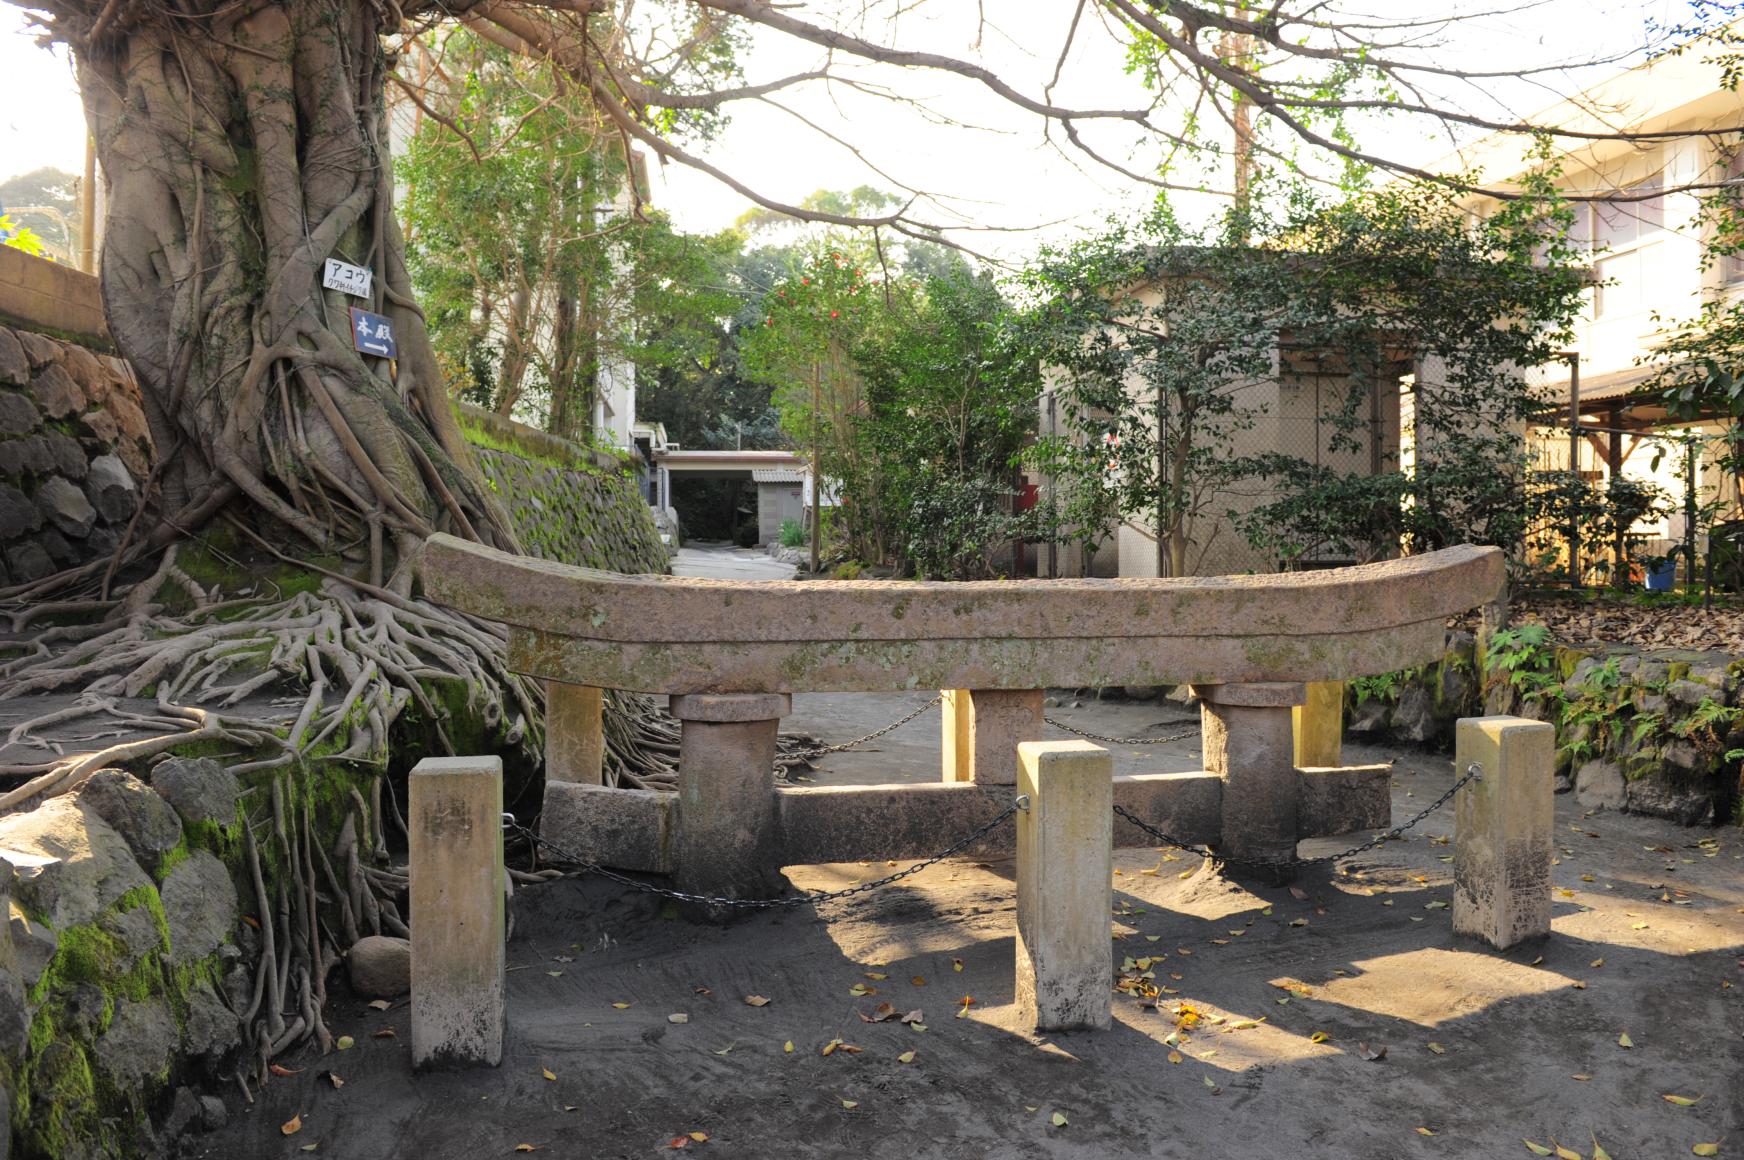 The Torii gate of Kurokami Shrine